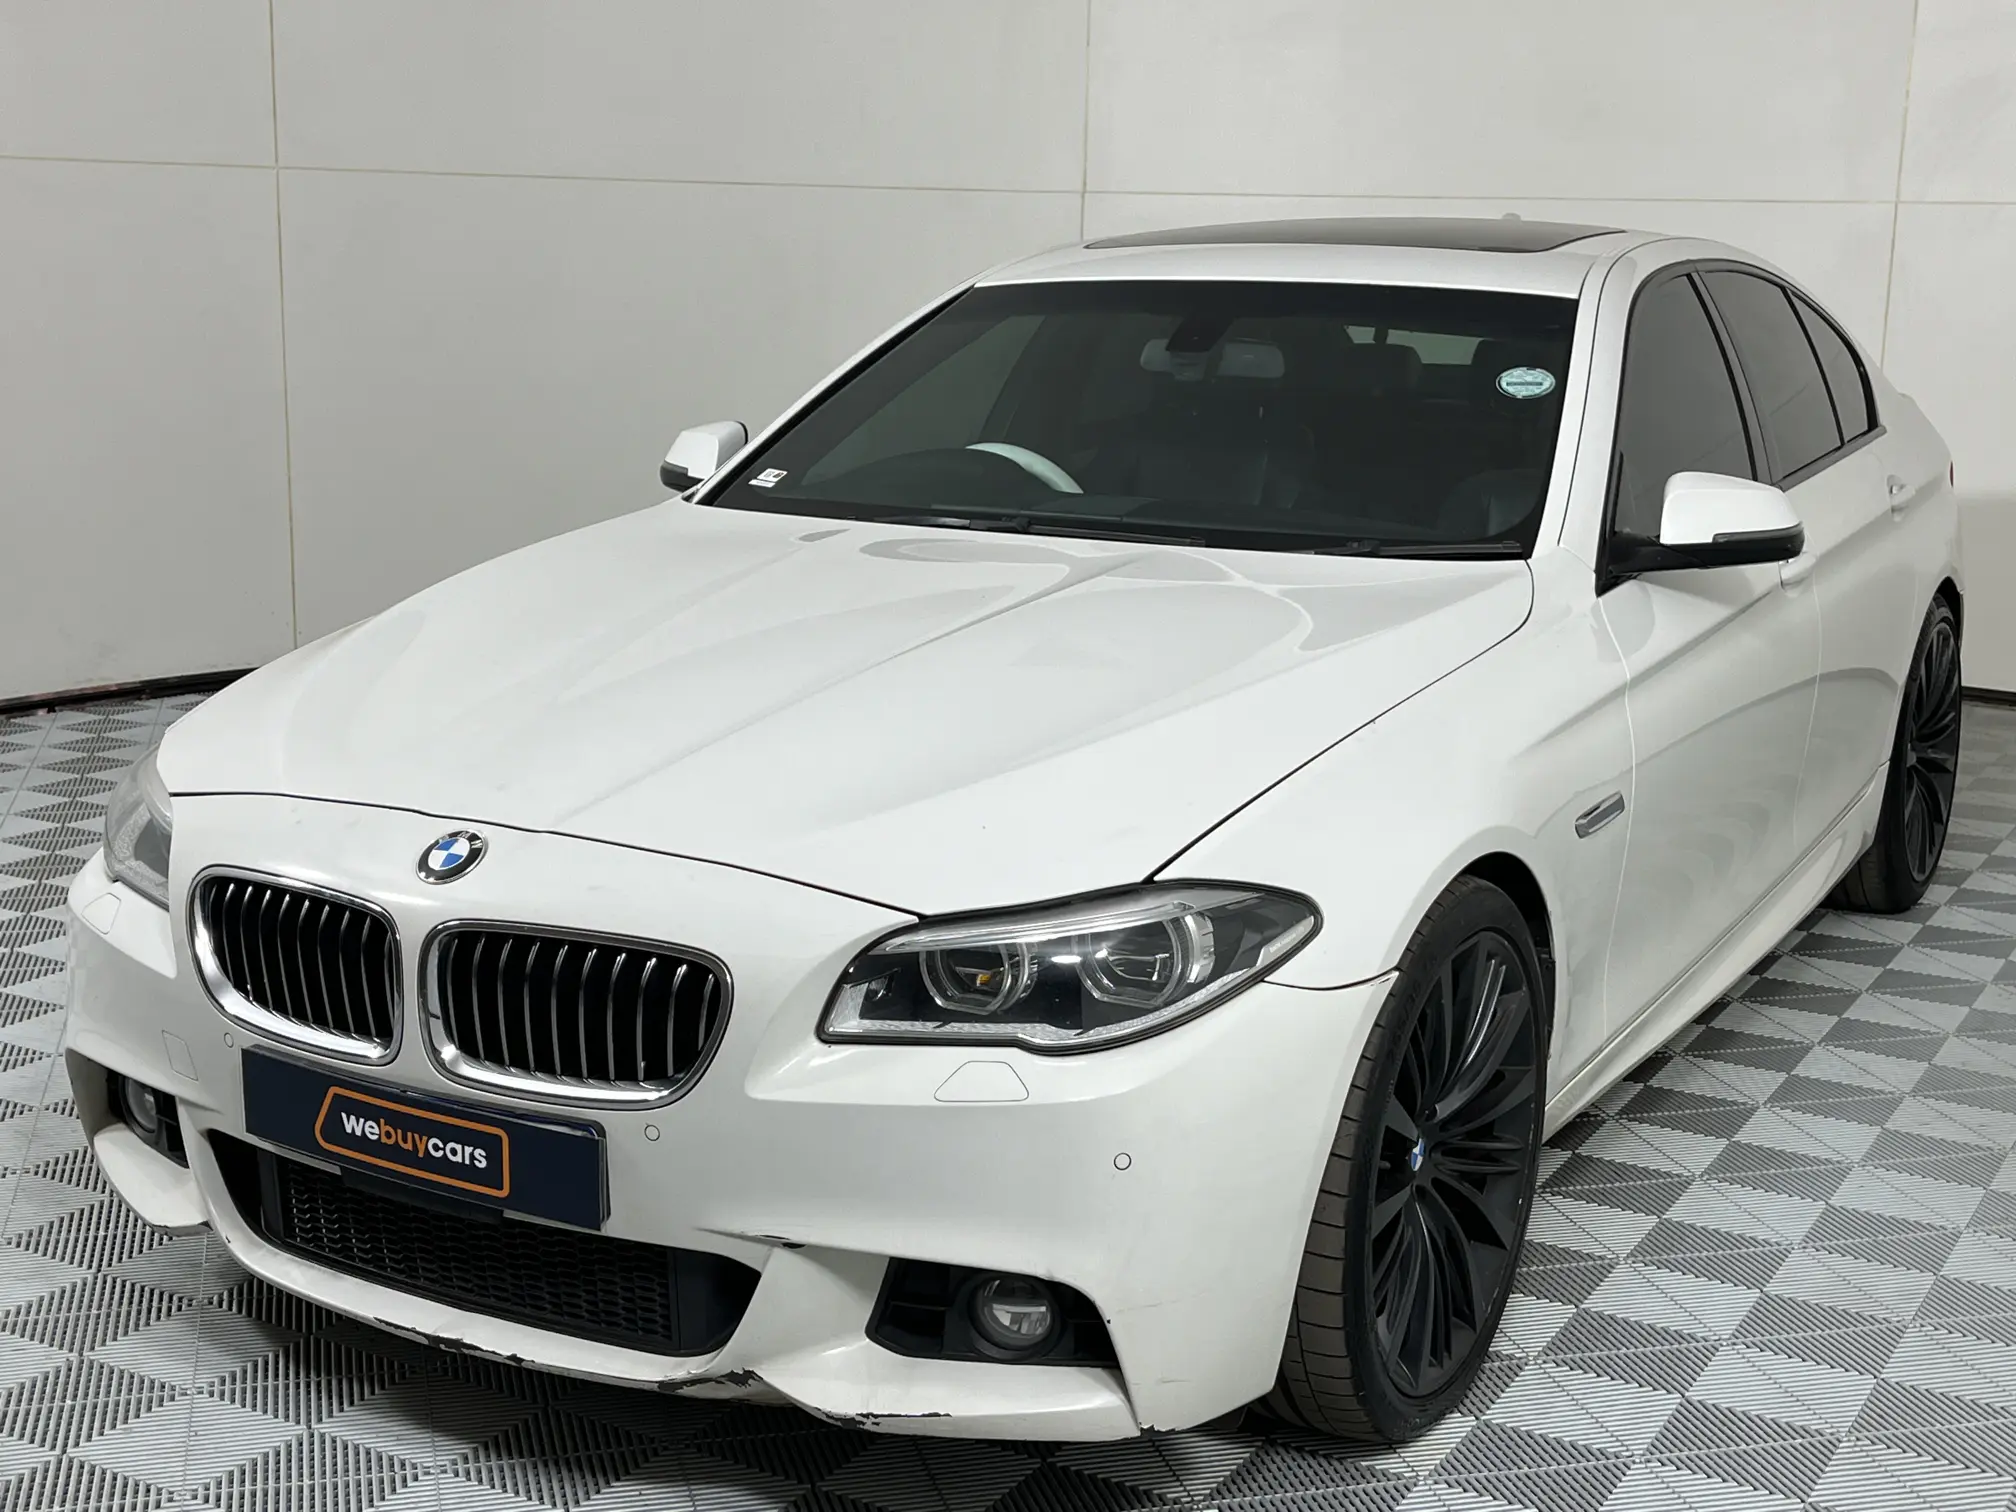 2015 BMW 5 Series 520i Auto (F10)